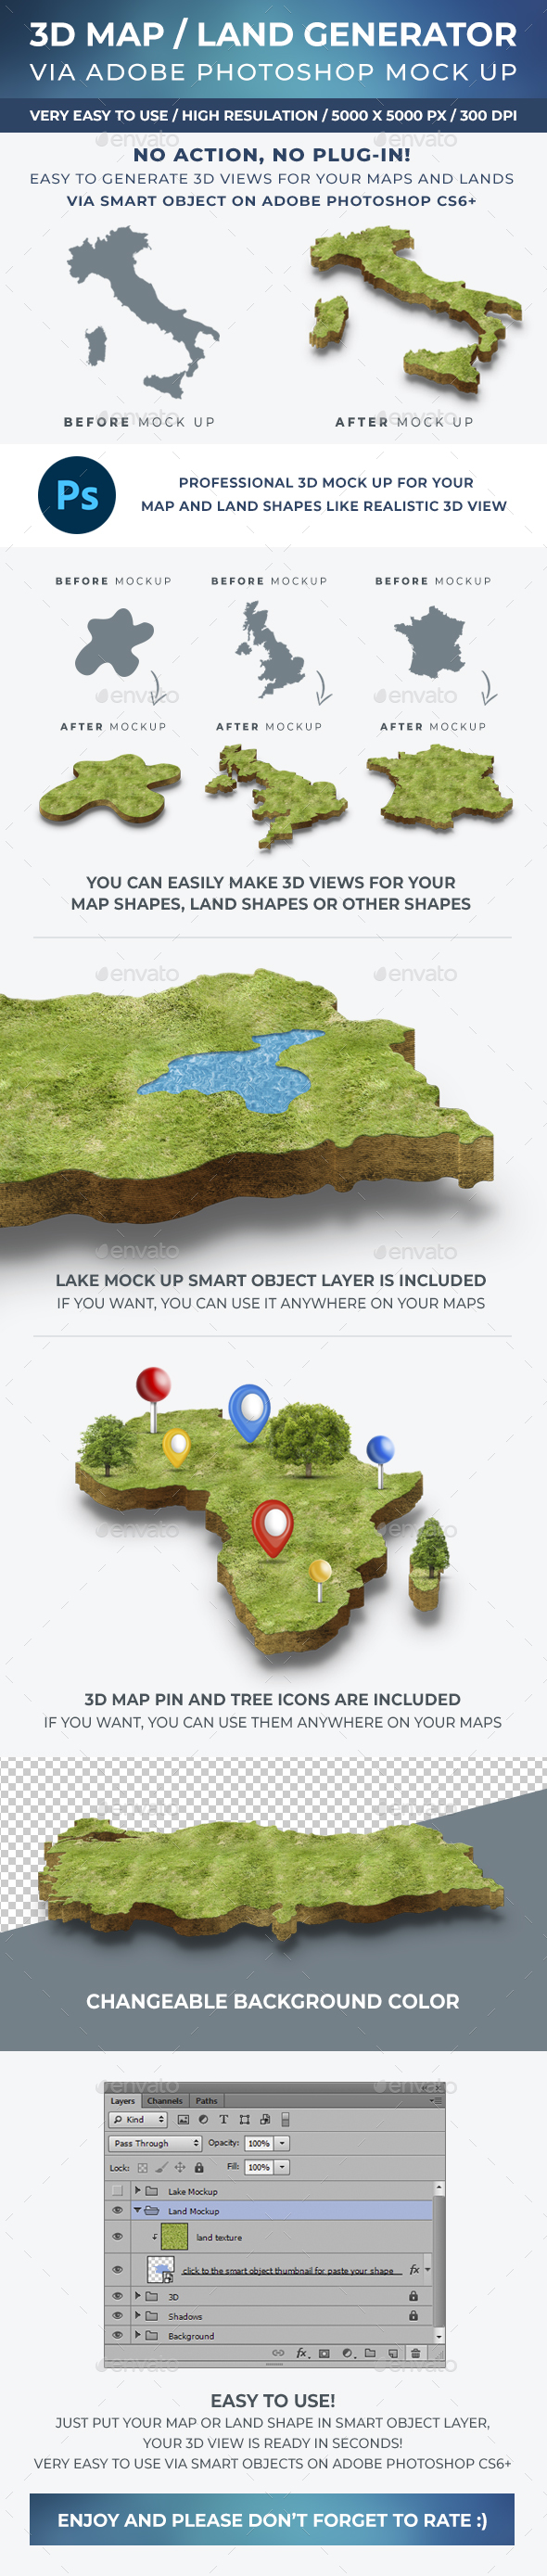 3D Map / Land Generator Via Photoshop Mockup